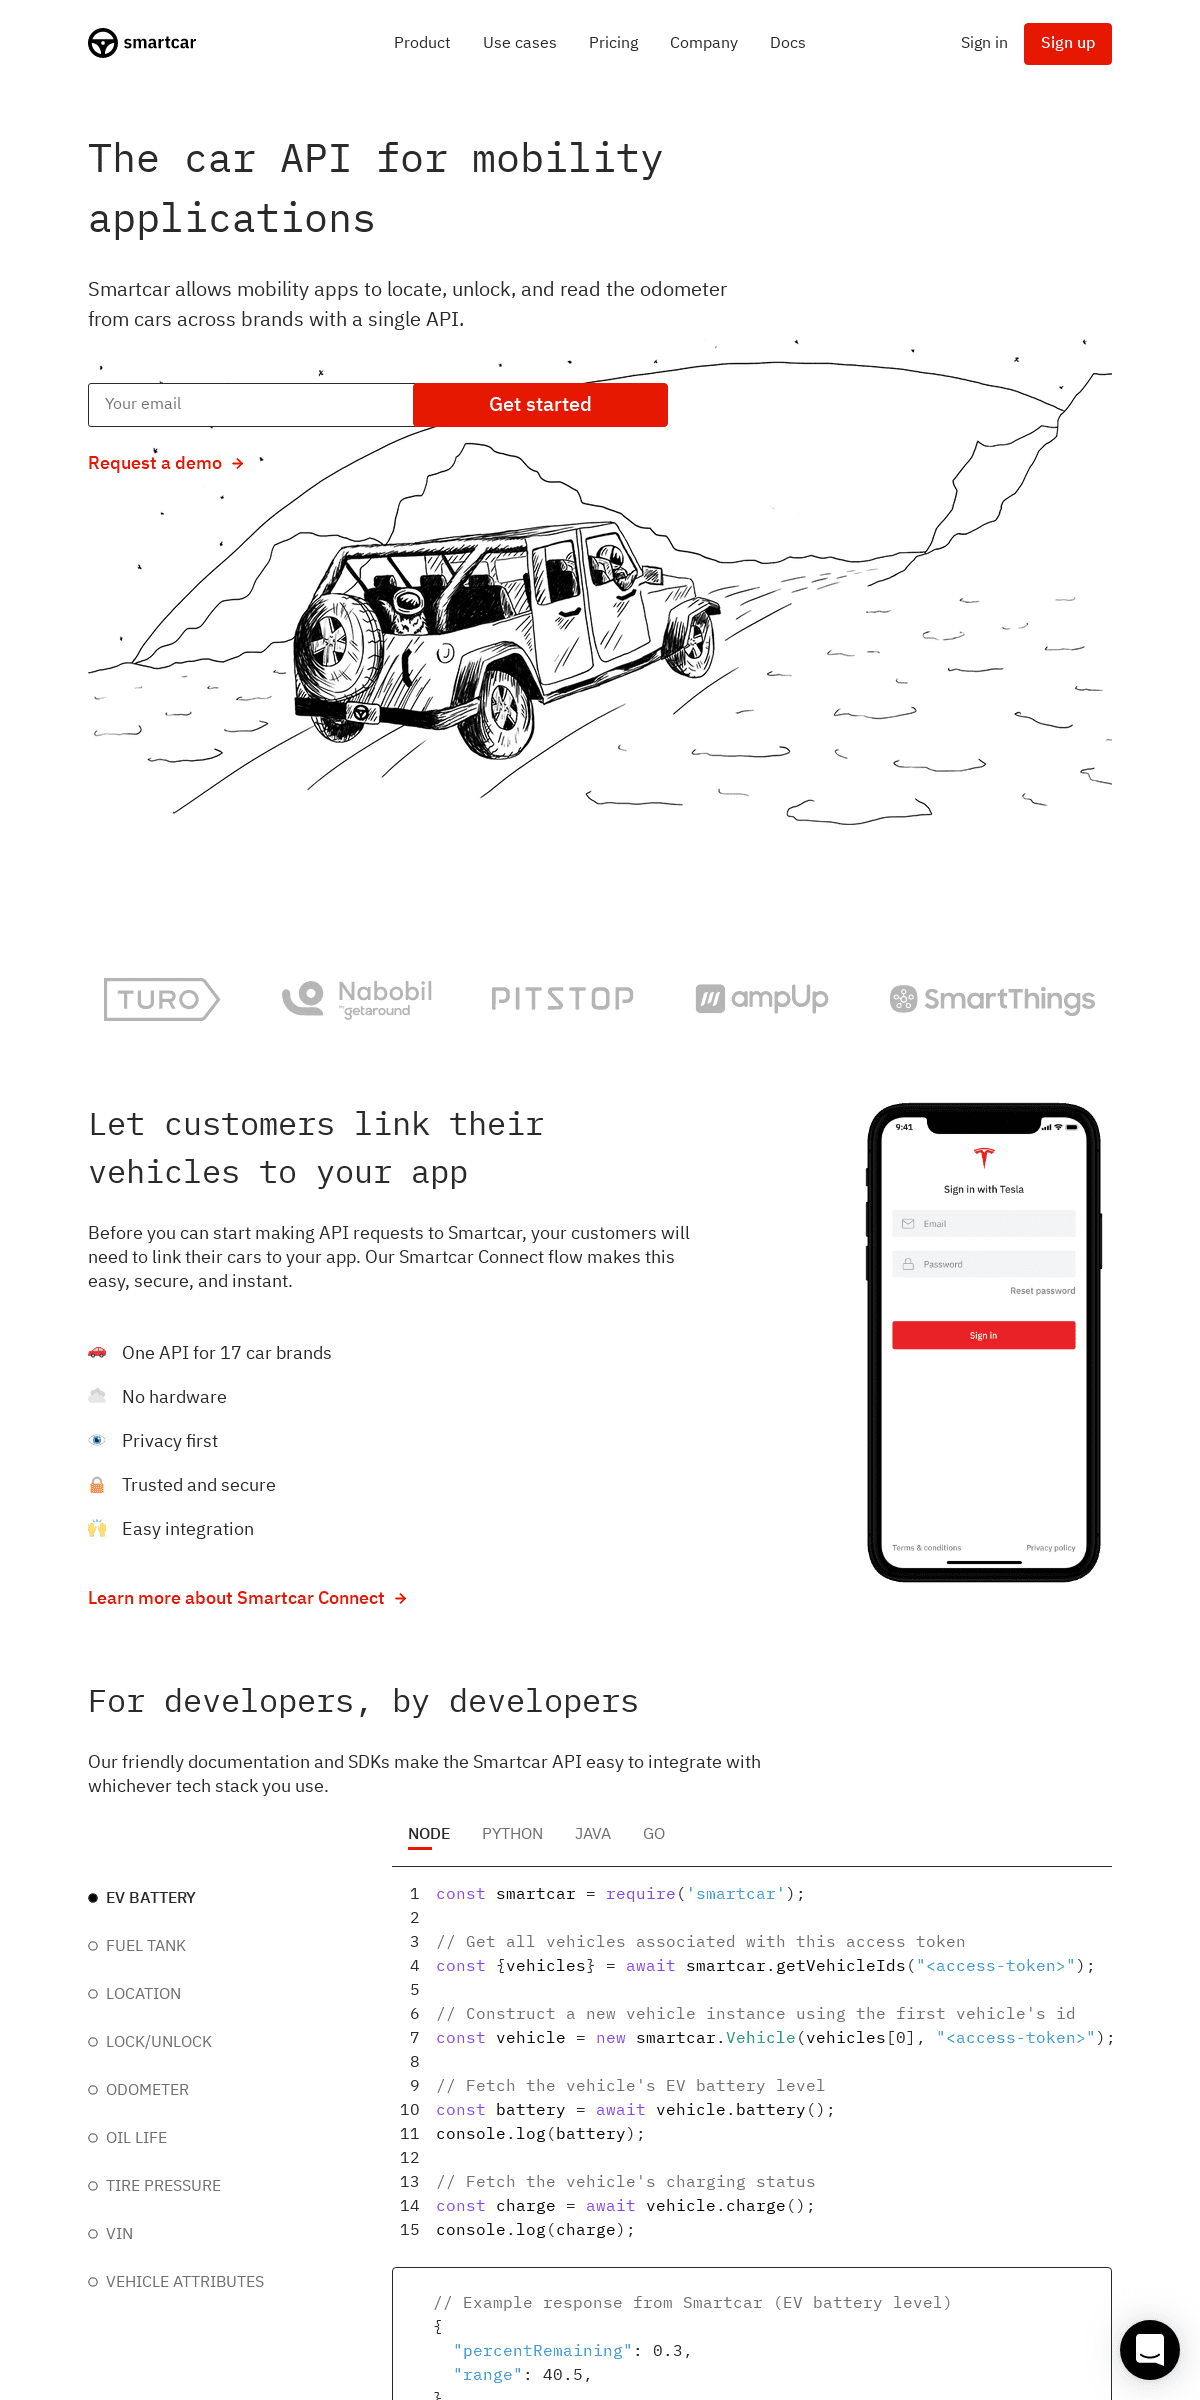 A complete backup of smartcar.com